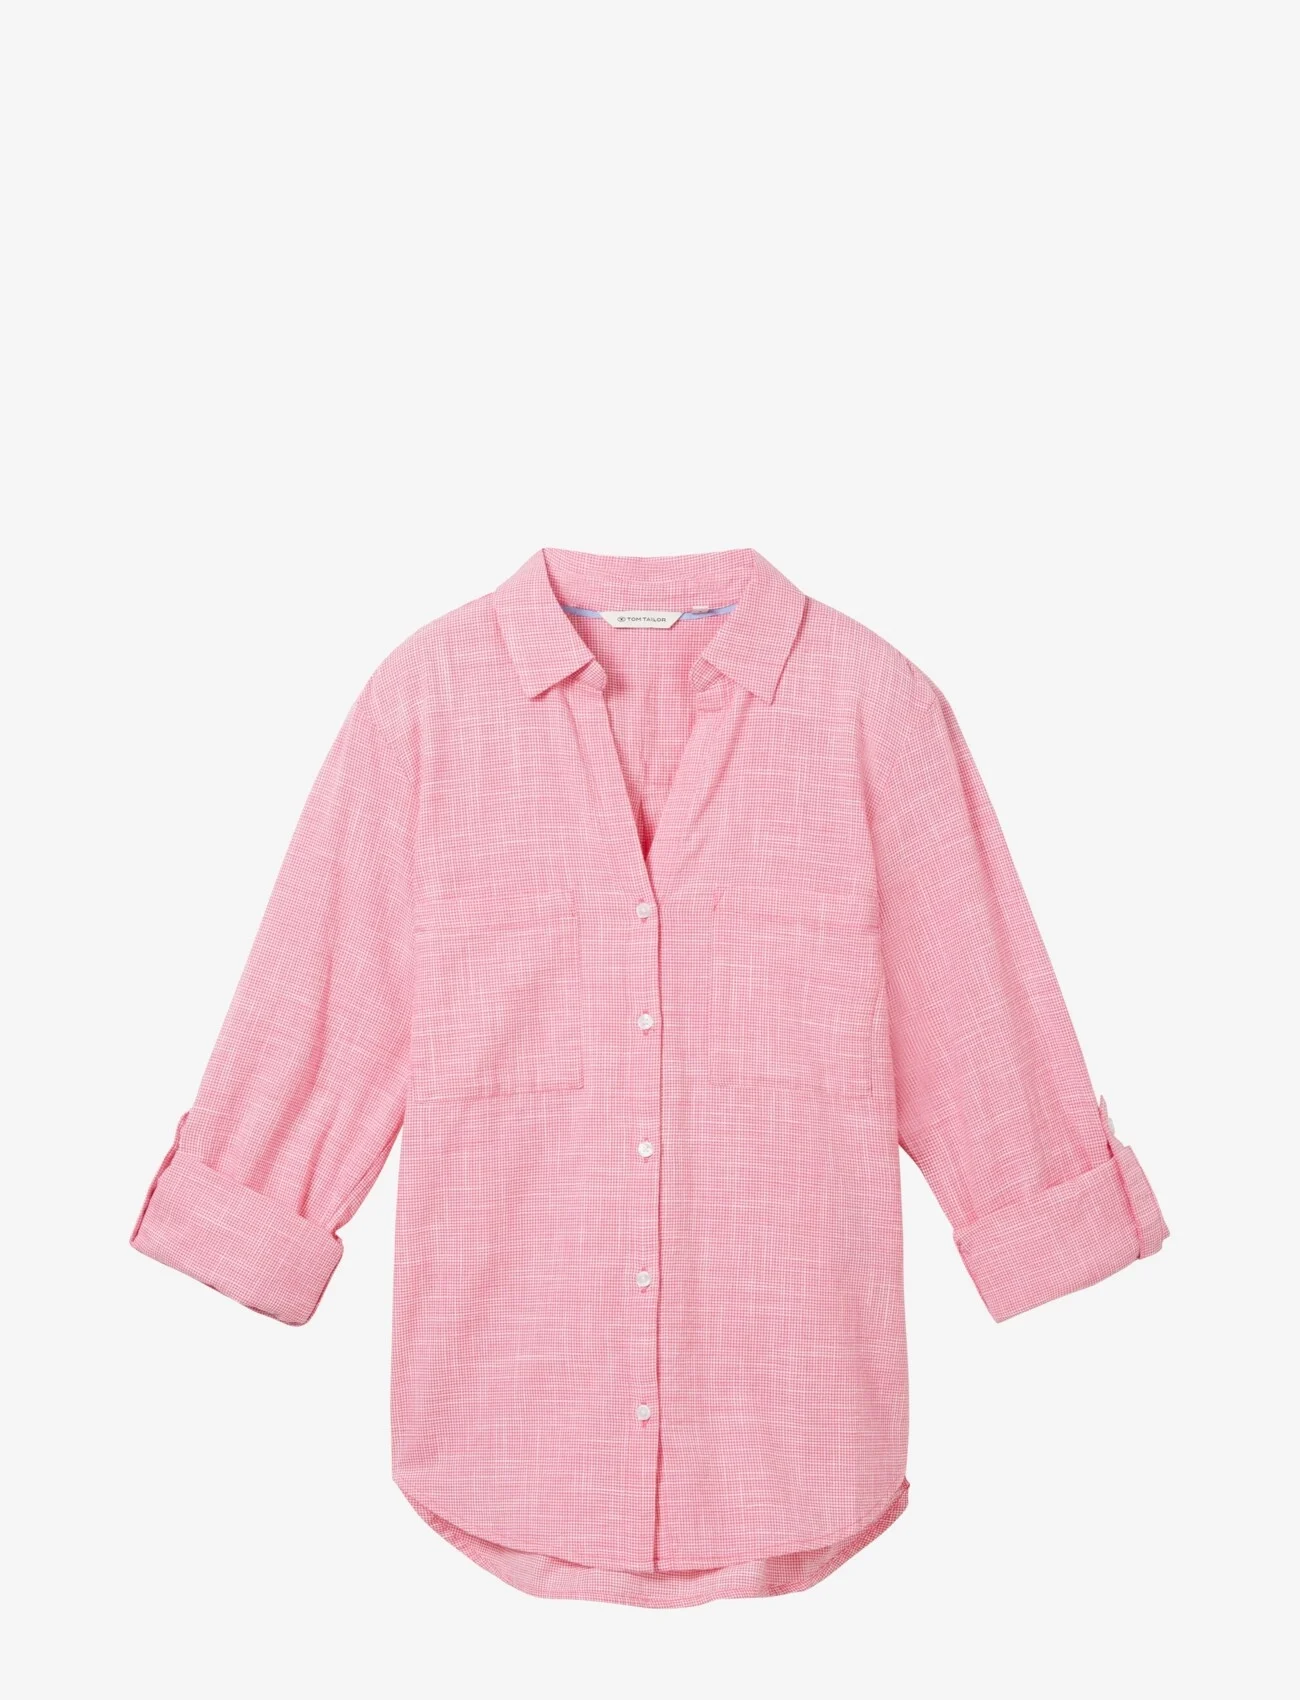 Tom Tailor - blouse with slub structure - pitkähihaiset paidat - carmine pink - 0